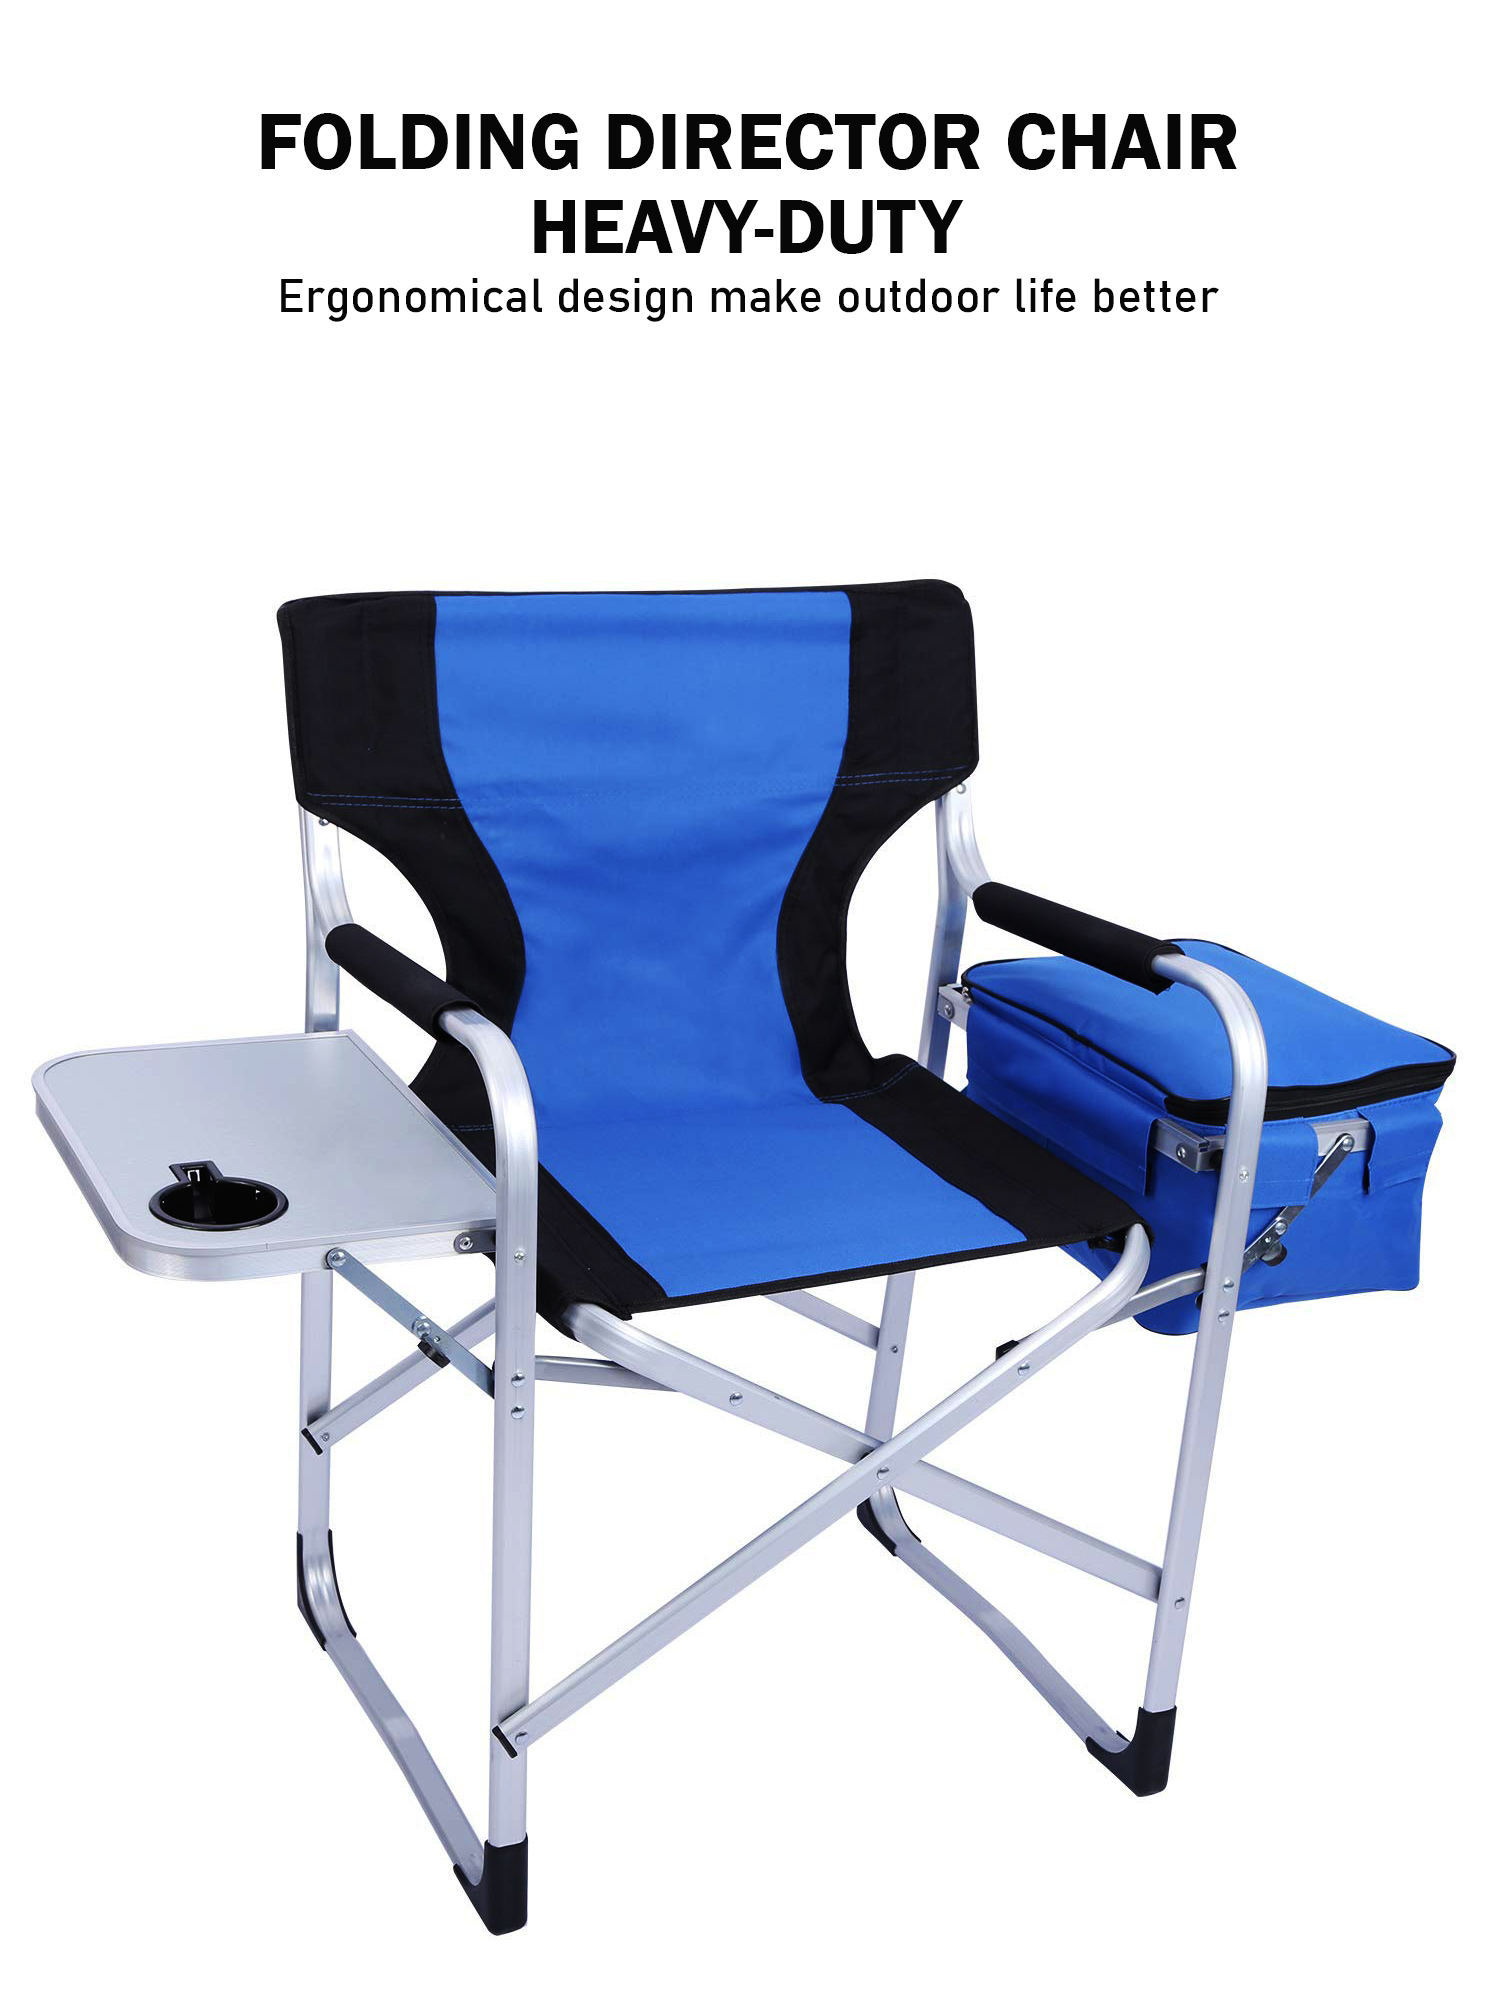 Foldable Chair with storage box - Bas kuwait